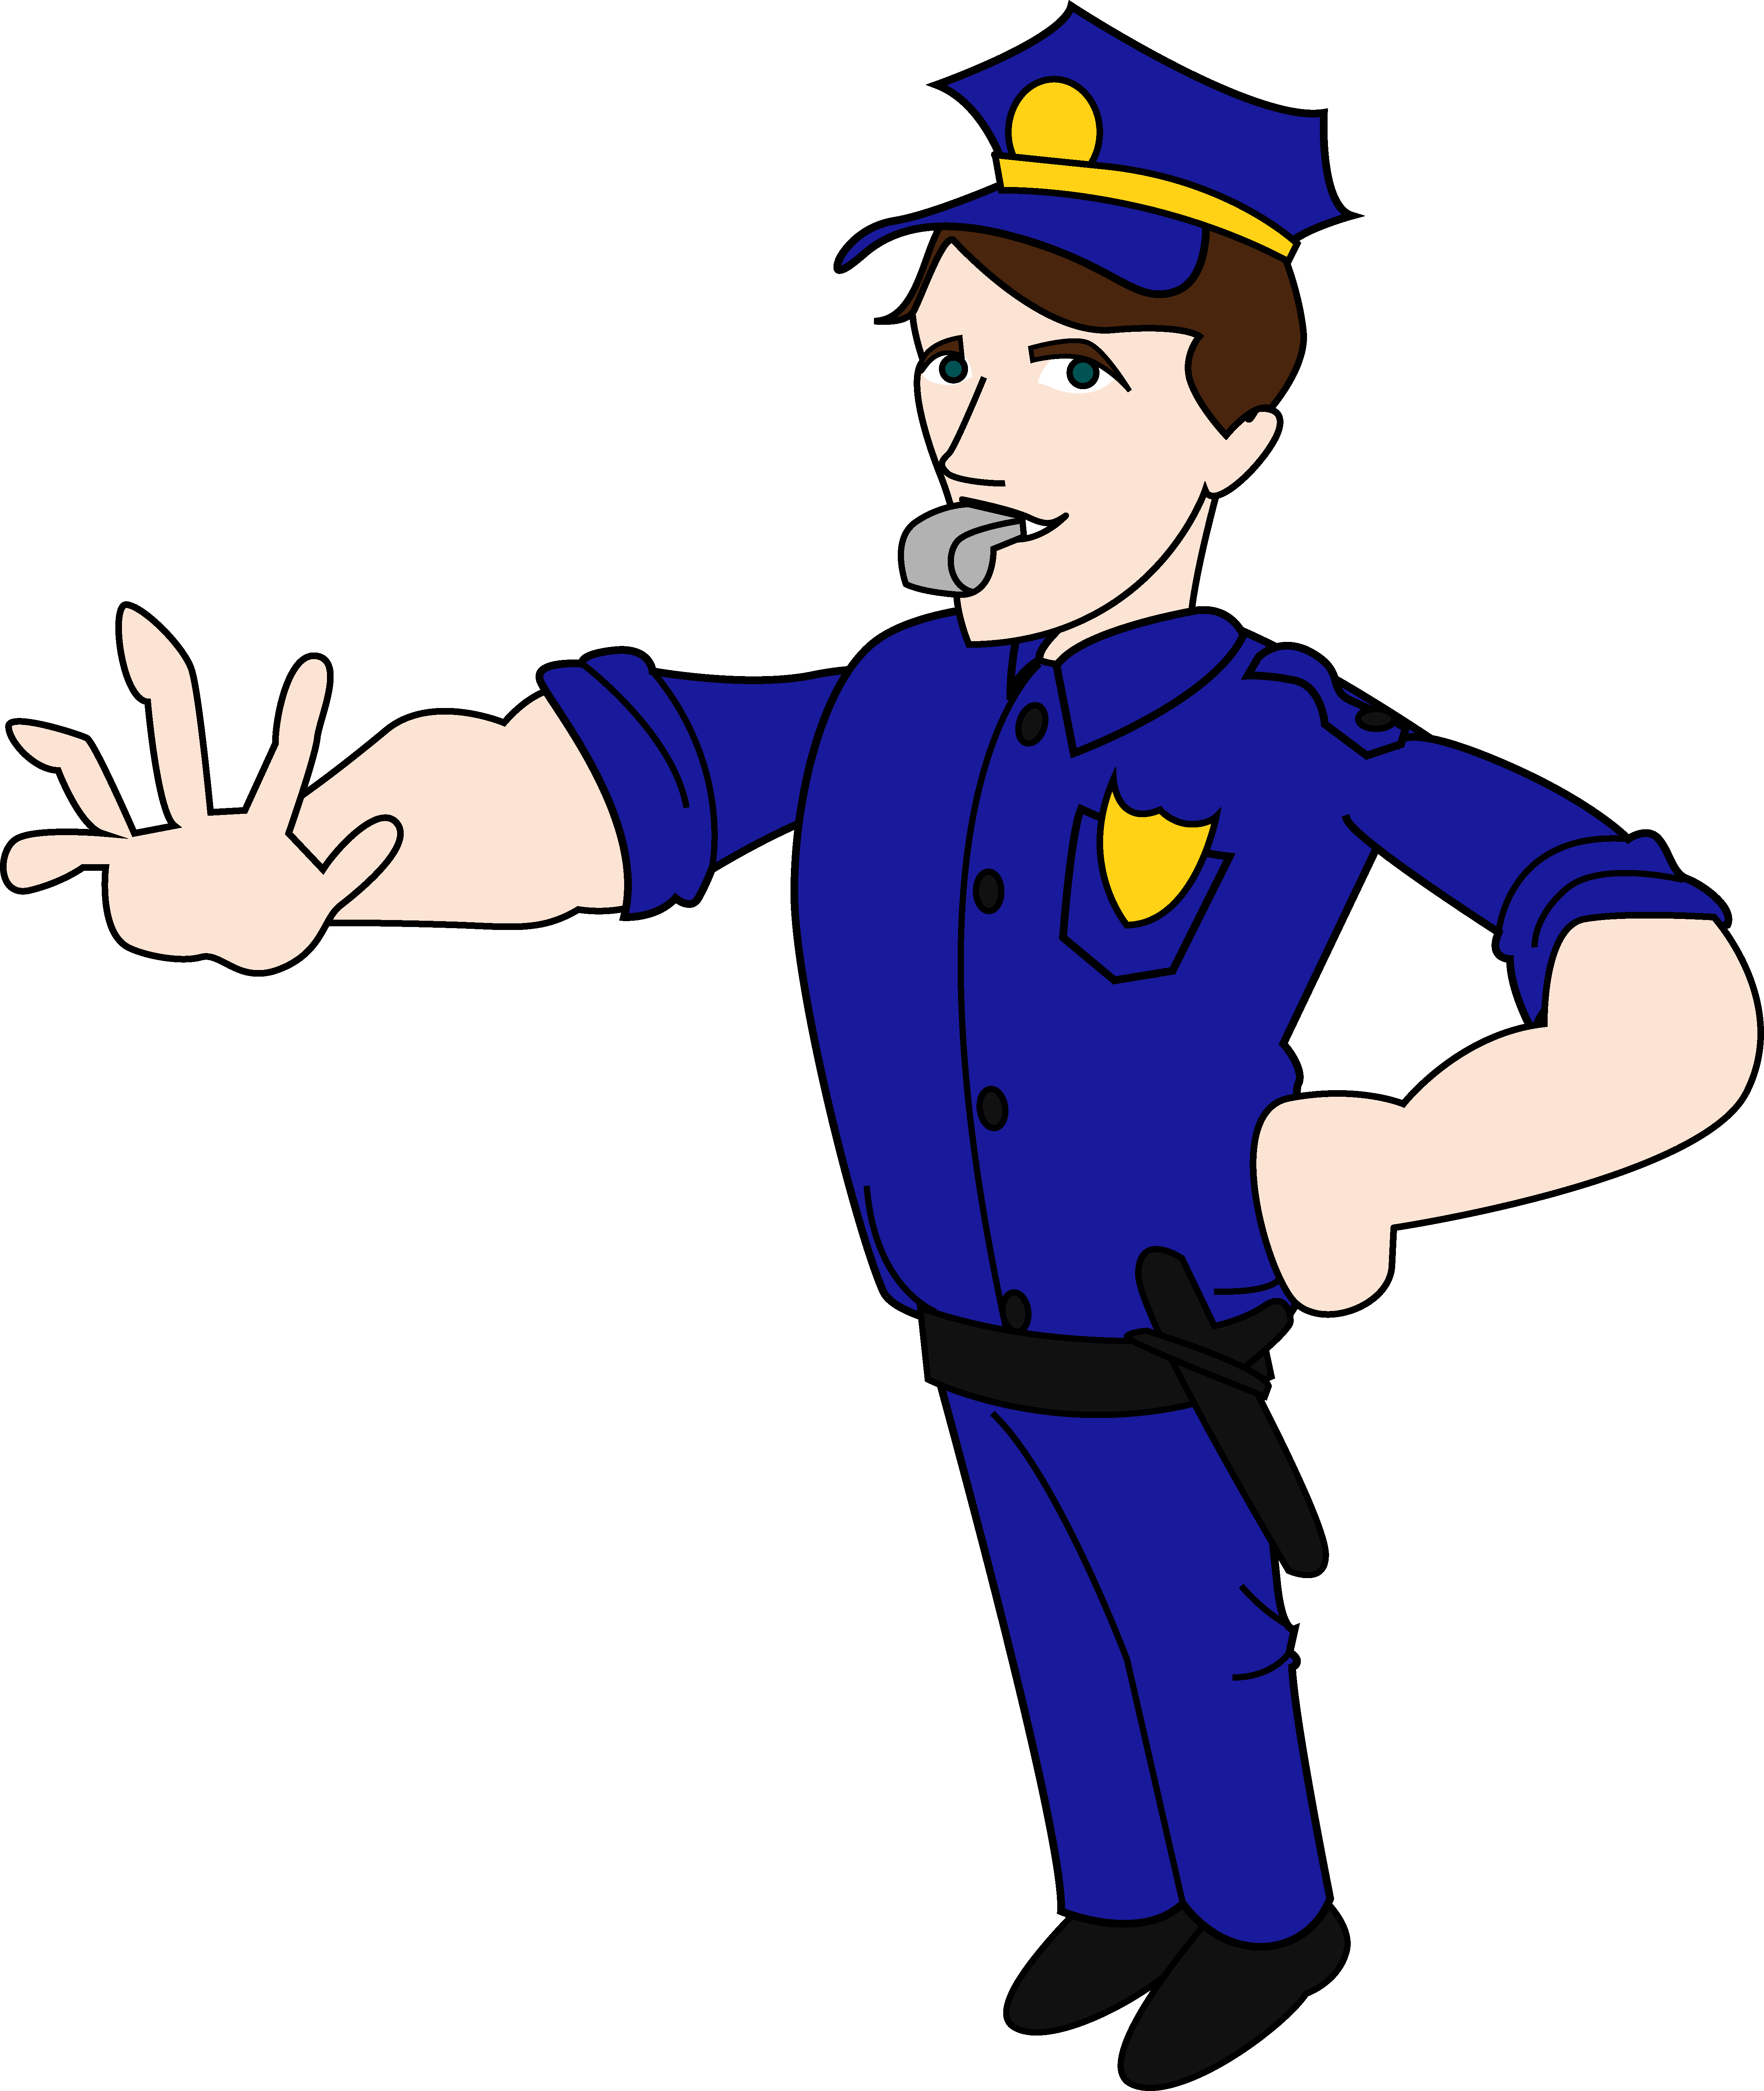 Cop Policeman PNG Clip Art Im